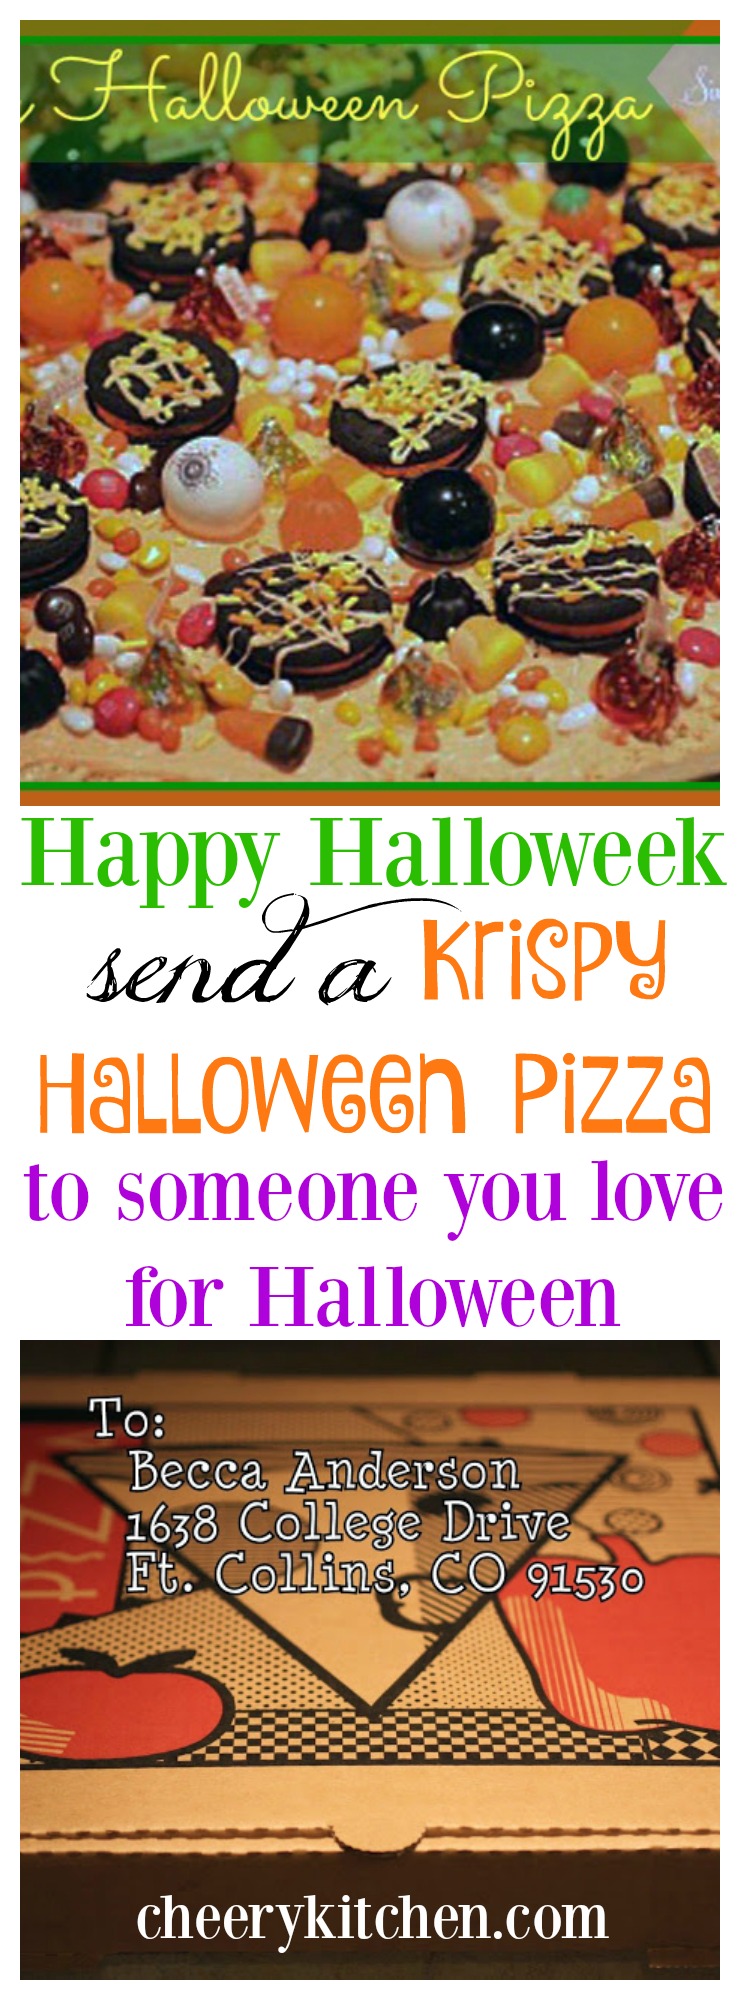 Krispy Halloween Pizza